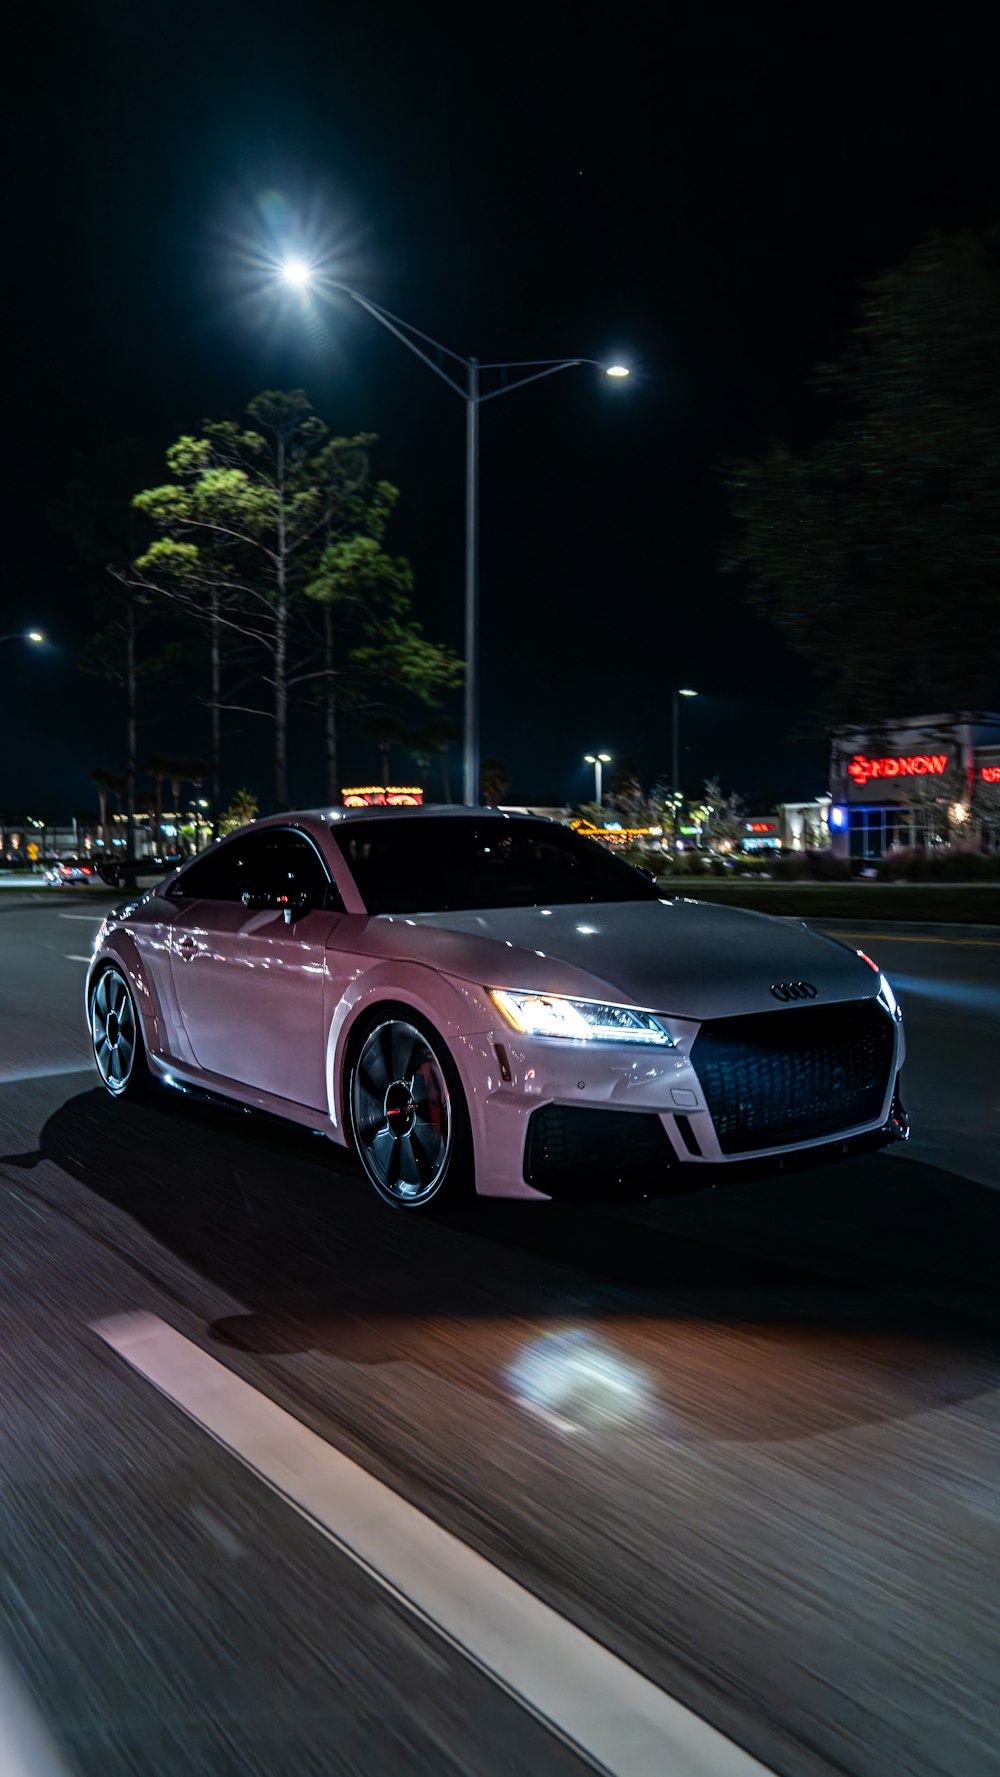 Un coche rosa conduciendo por una calle de noche